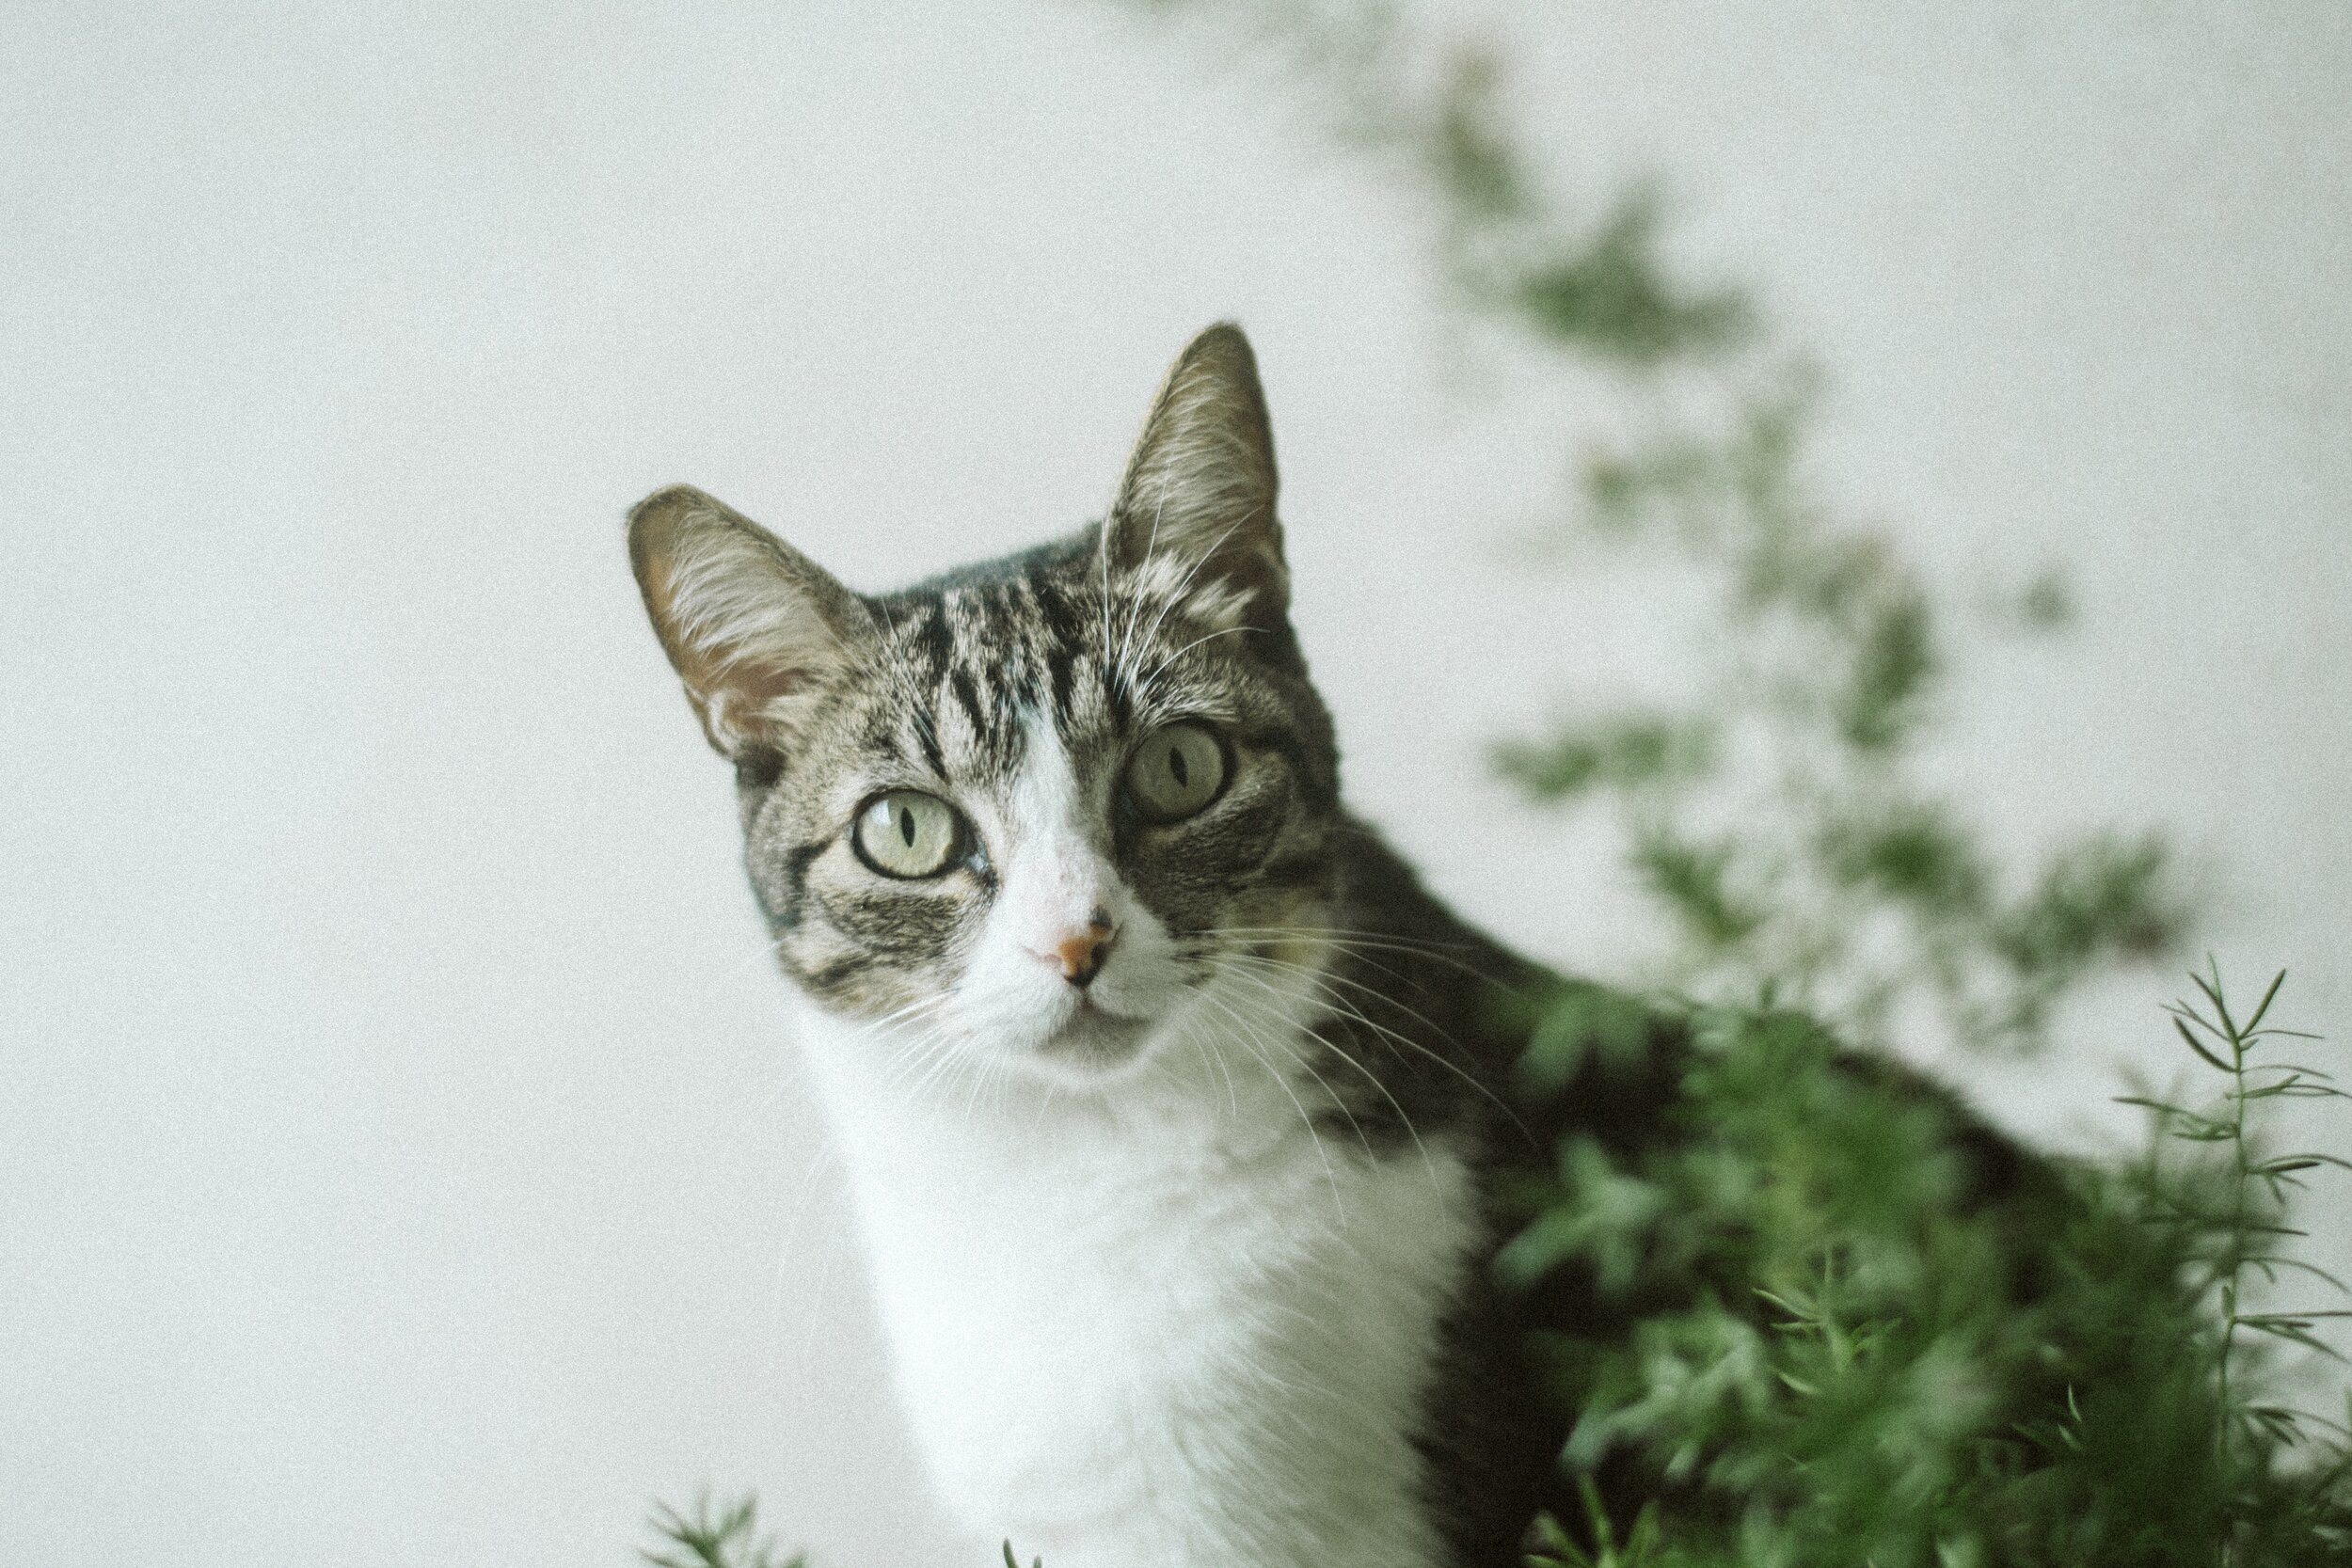 photo-of-cat-beside-plant-3333541.jpg